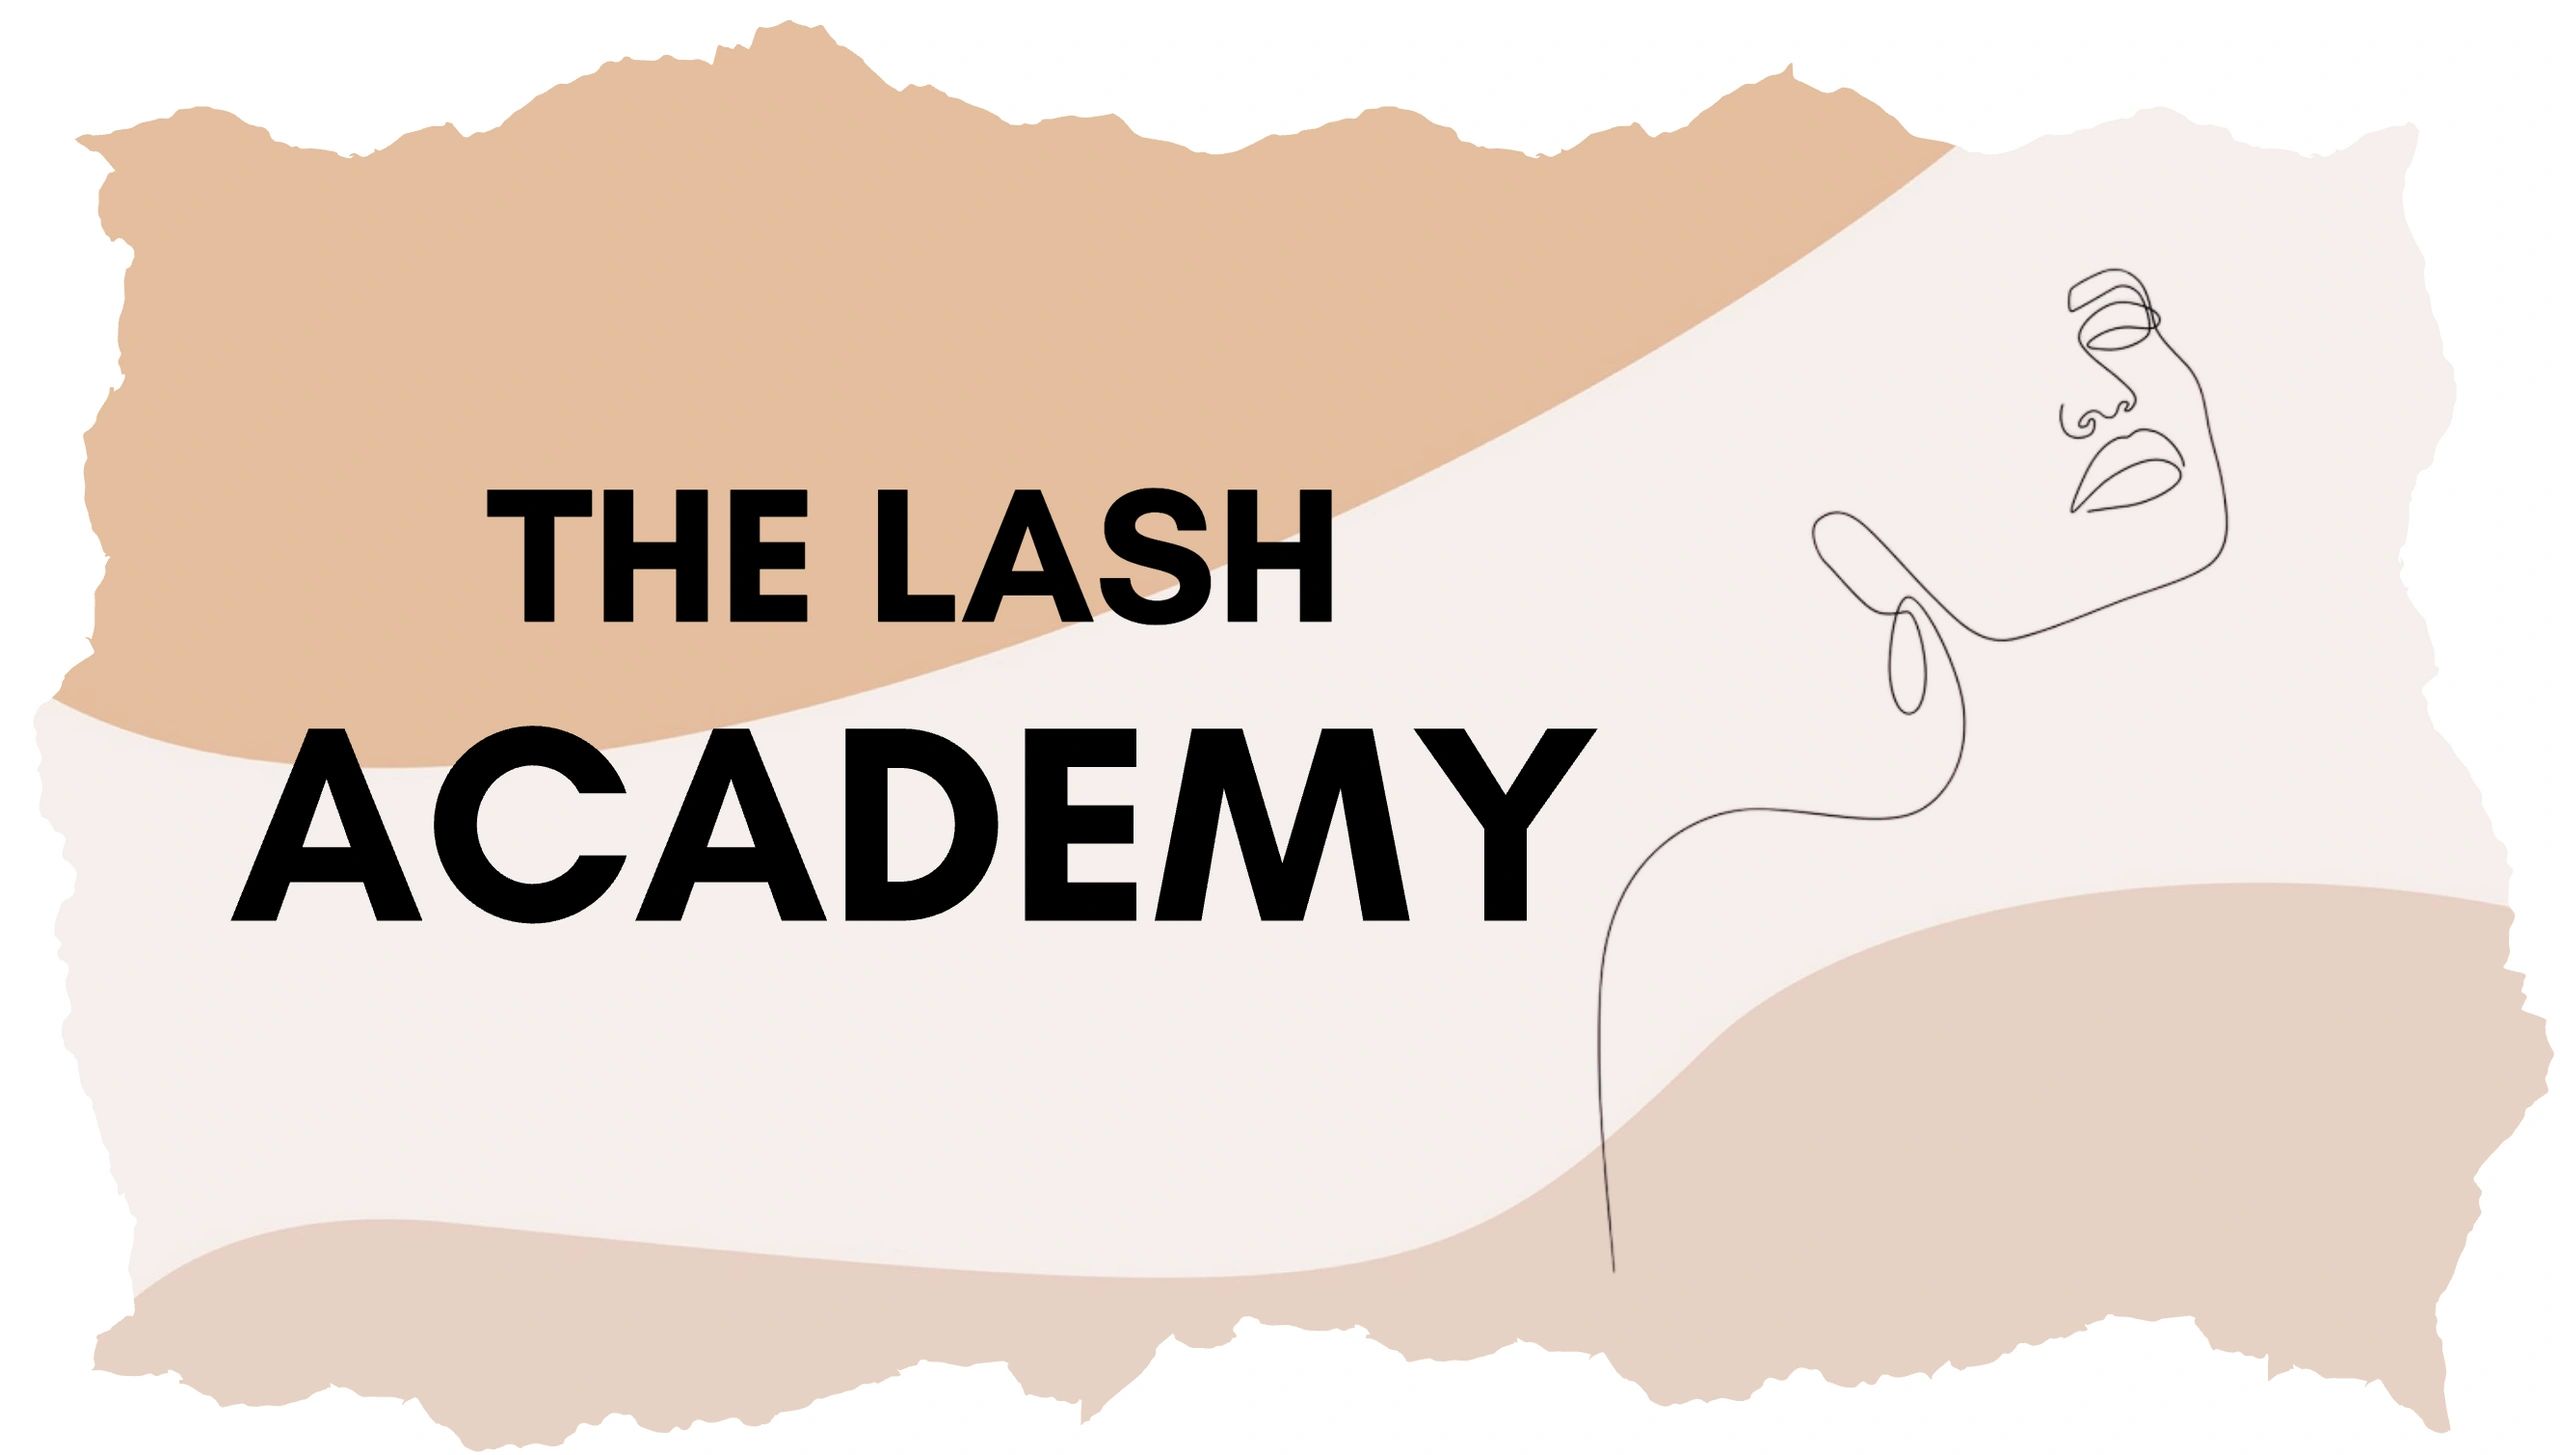 lash extensions
Lash Class
eyelash extension kits
eyelash extension training
lash extensions kit
eye